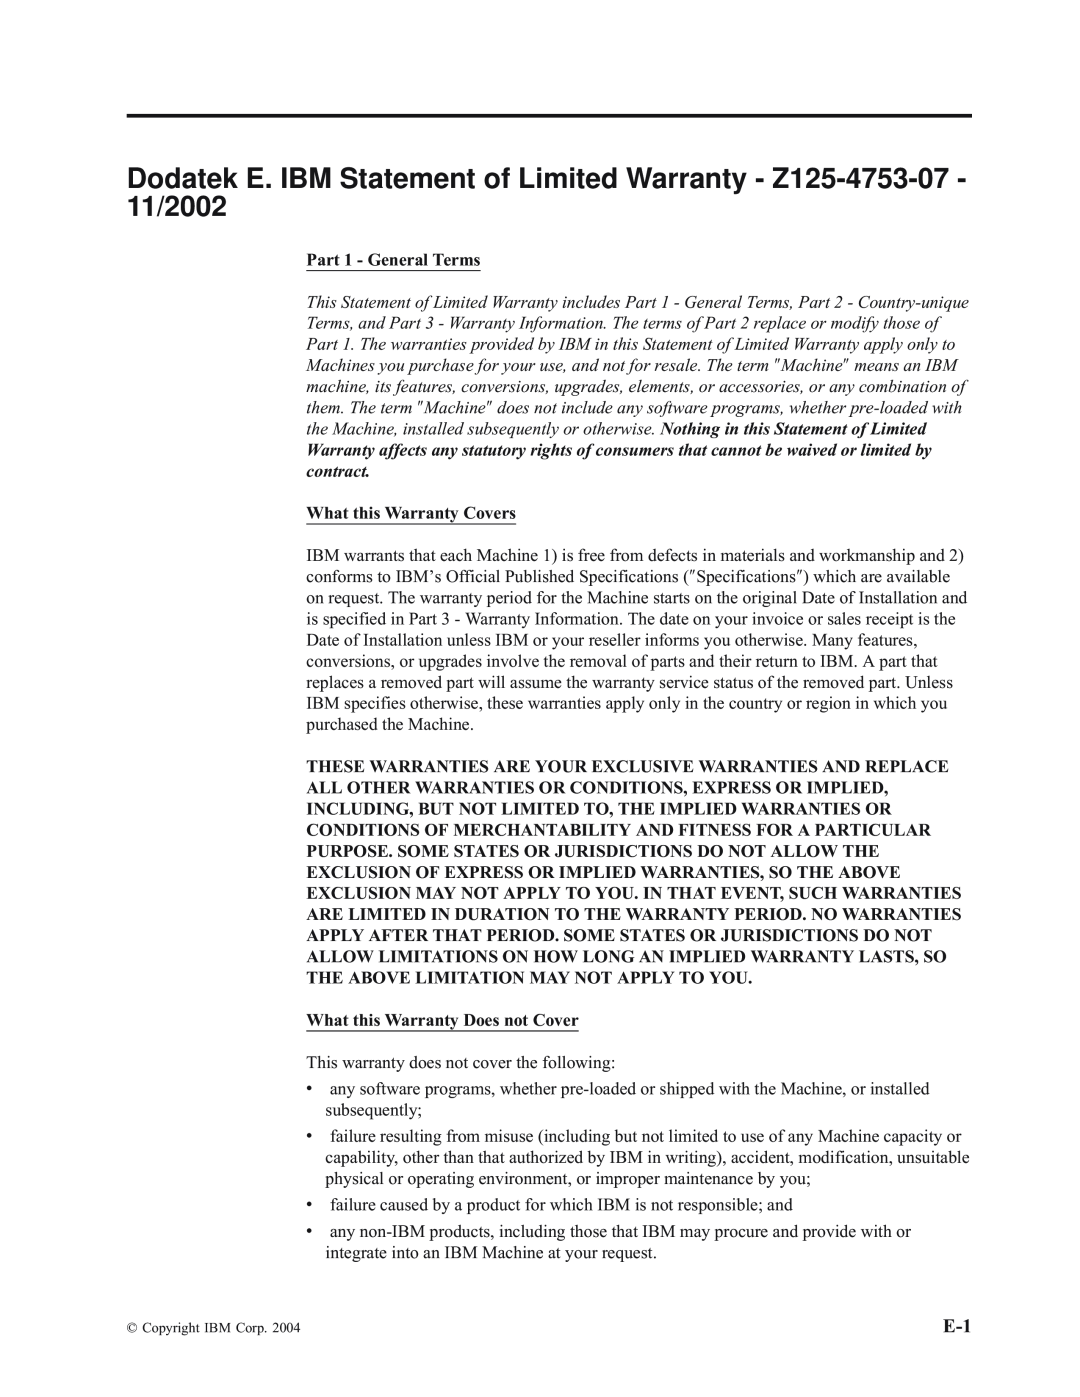 IBM E400 manual Dodatek E. IBM Statement of Limited Warranty - Z125-4753-07 - 11/2002, Part 1 - General Terms 